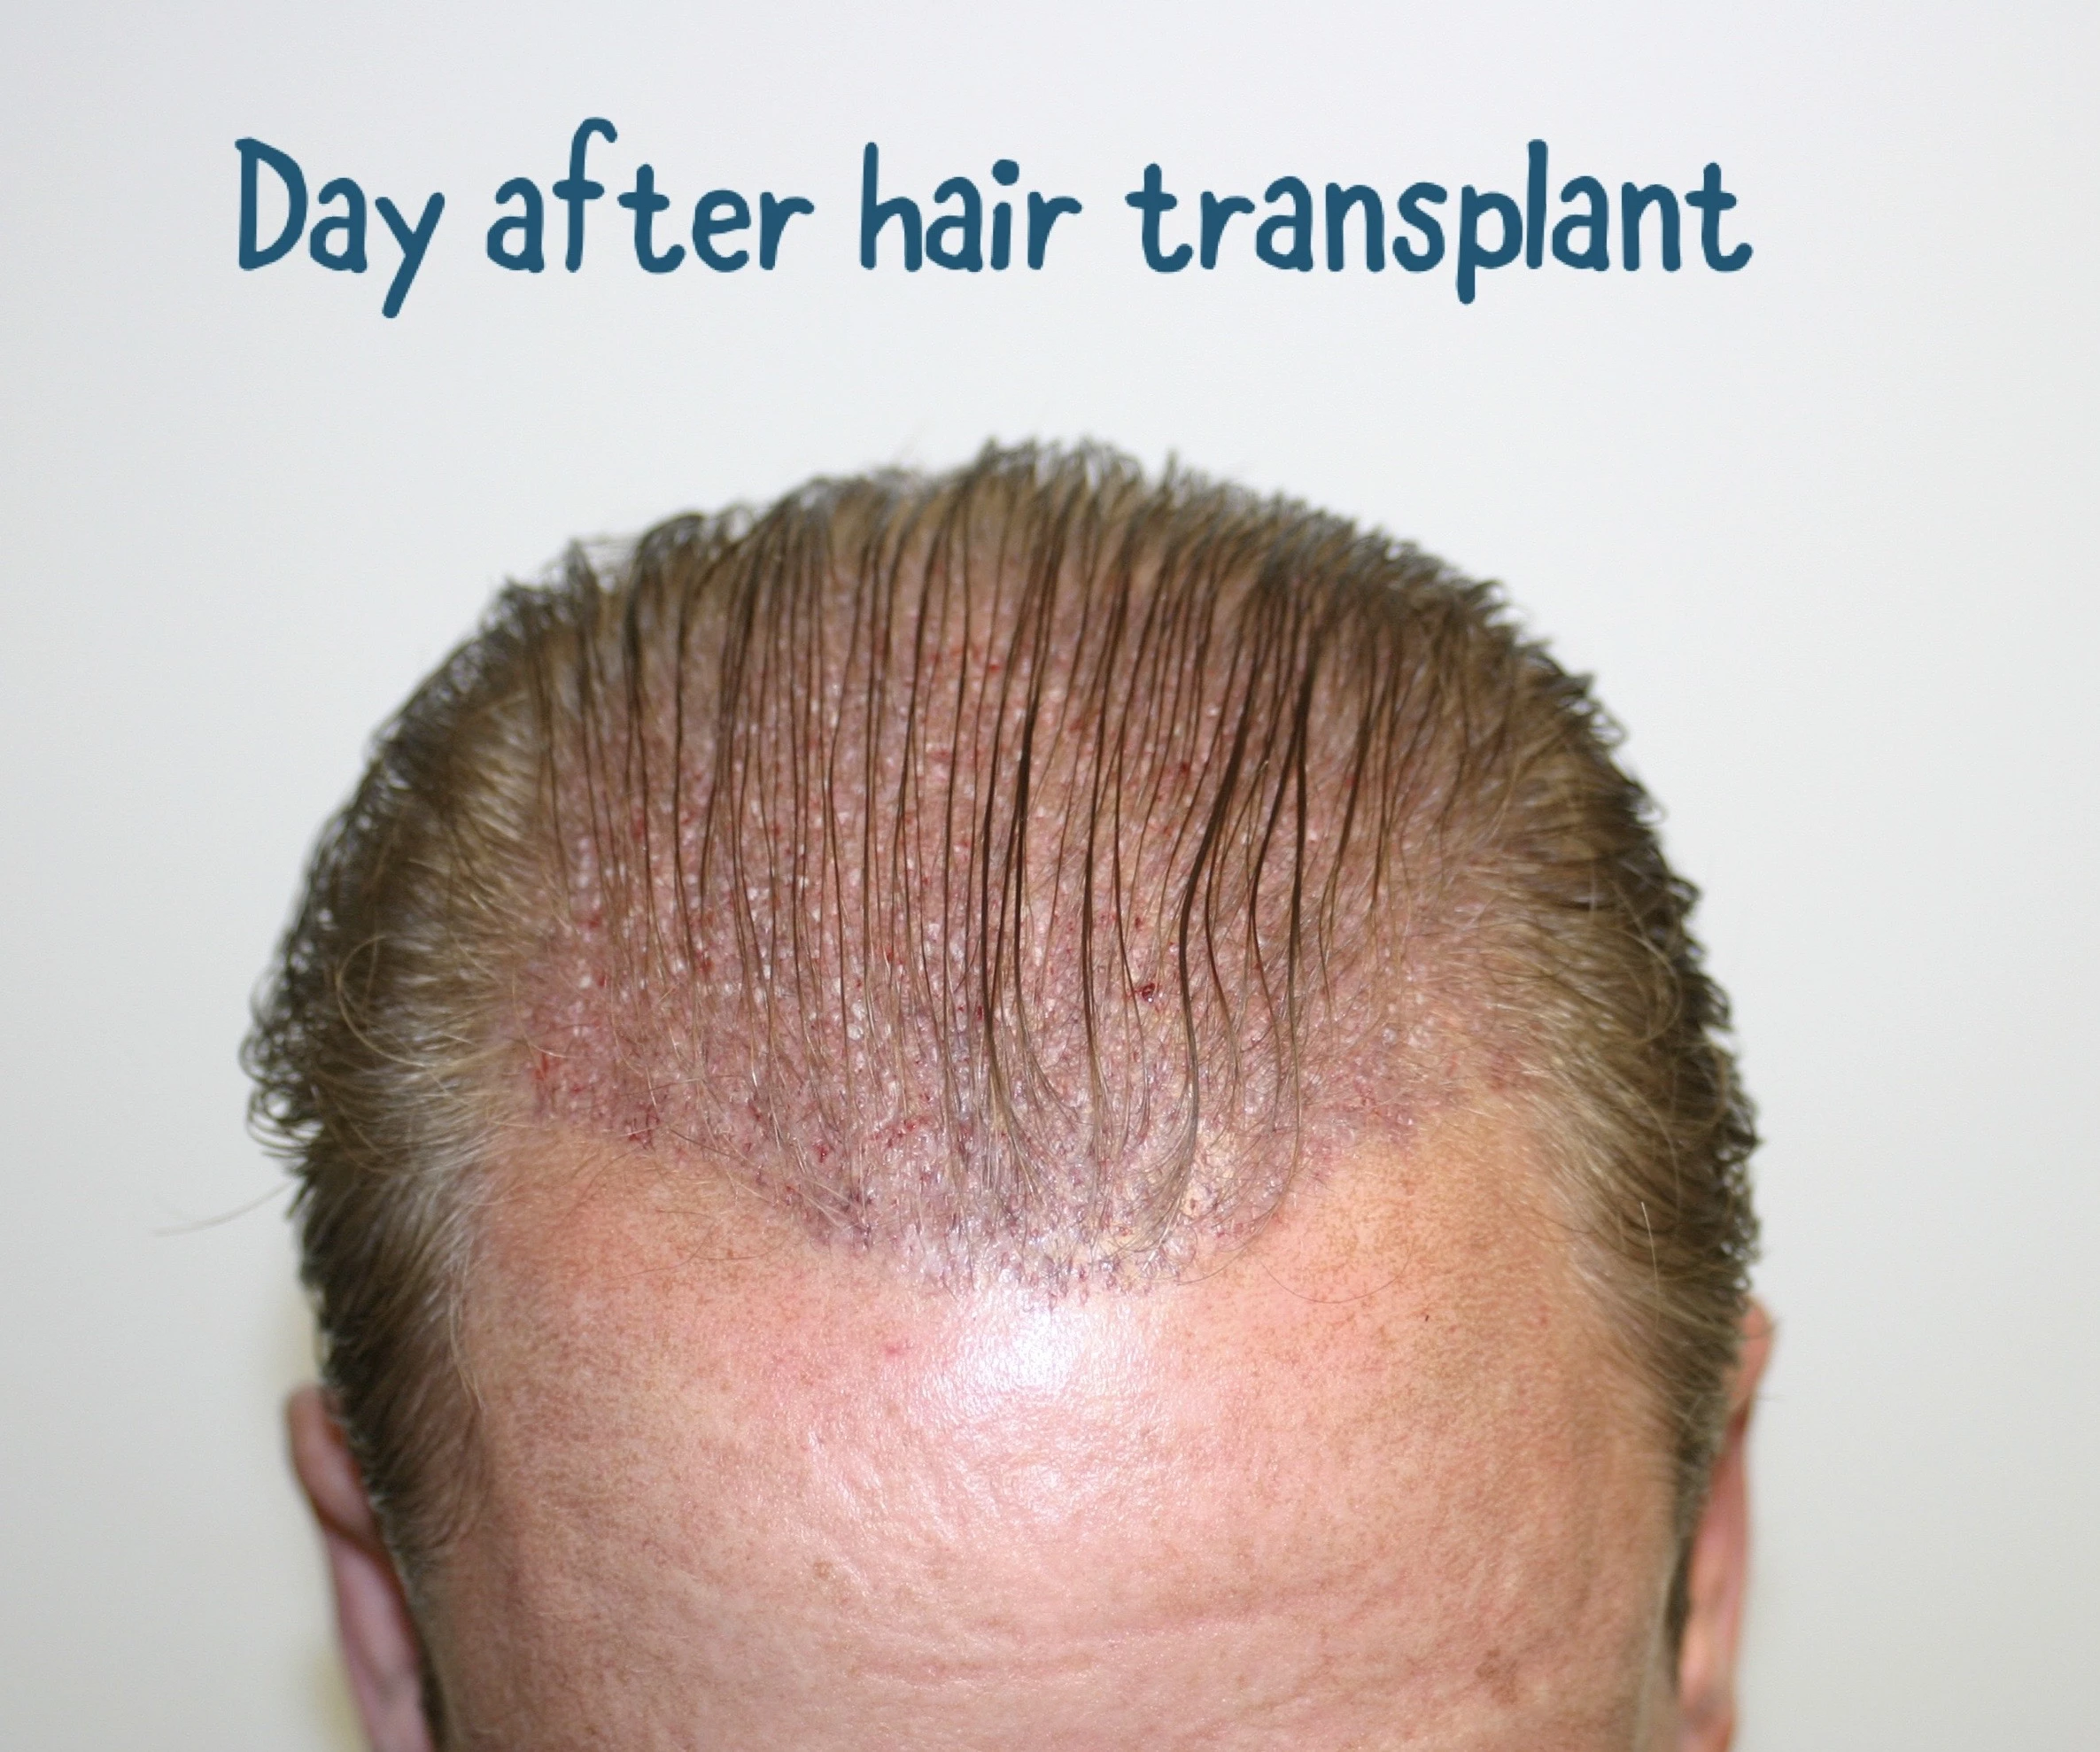 Hair Transplant Aftercare Advice - Este